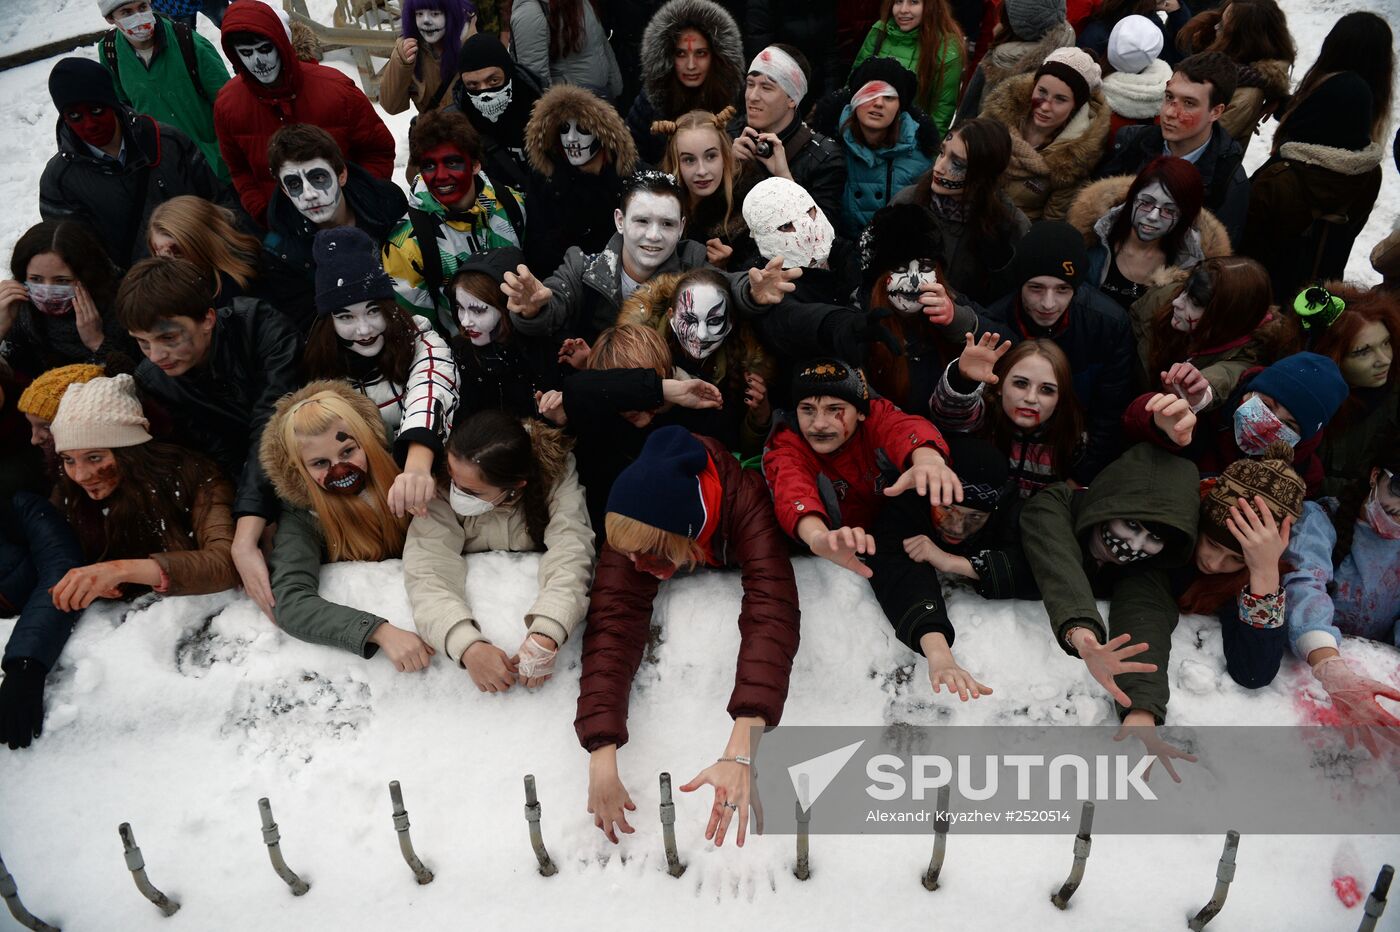 Halloween celebration in Novosibirsk